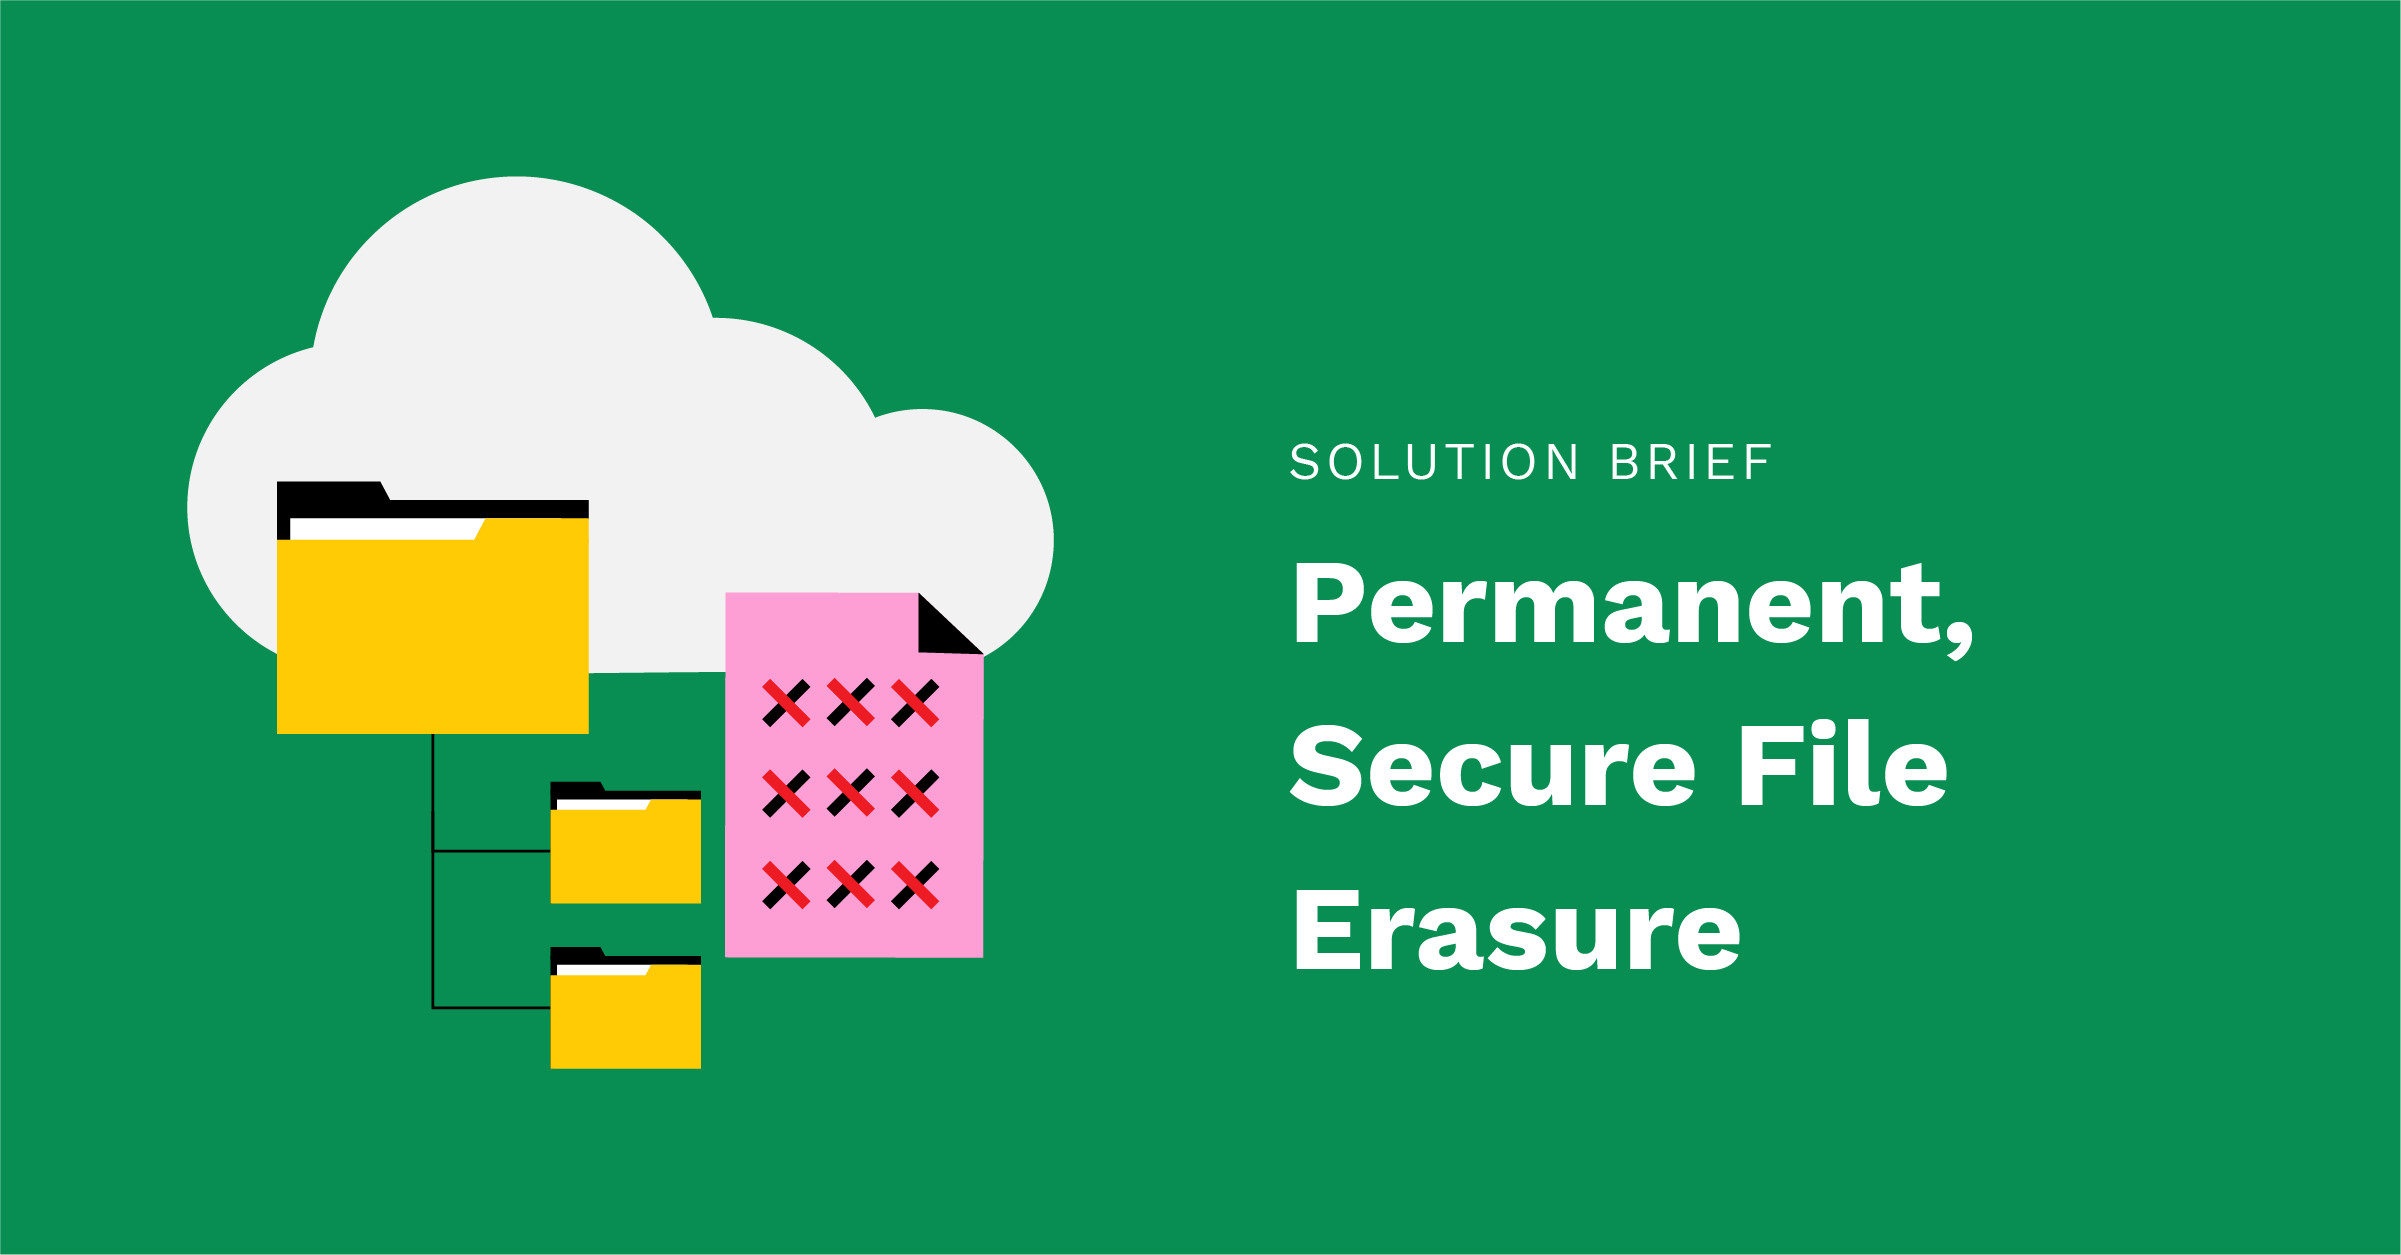 Solution brief – Permanent, Secure File Erasure